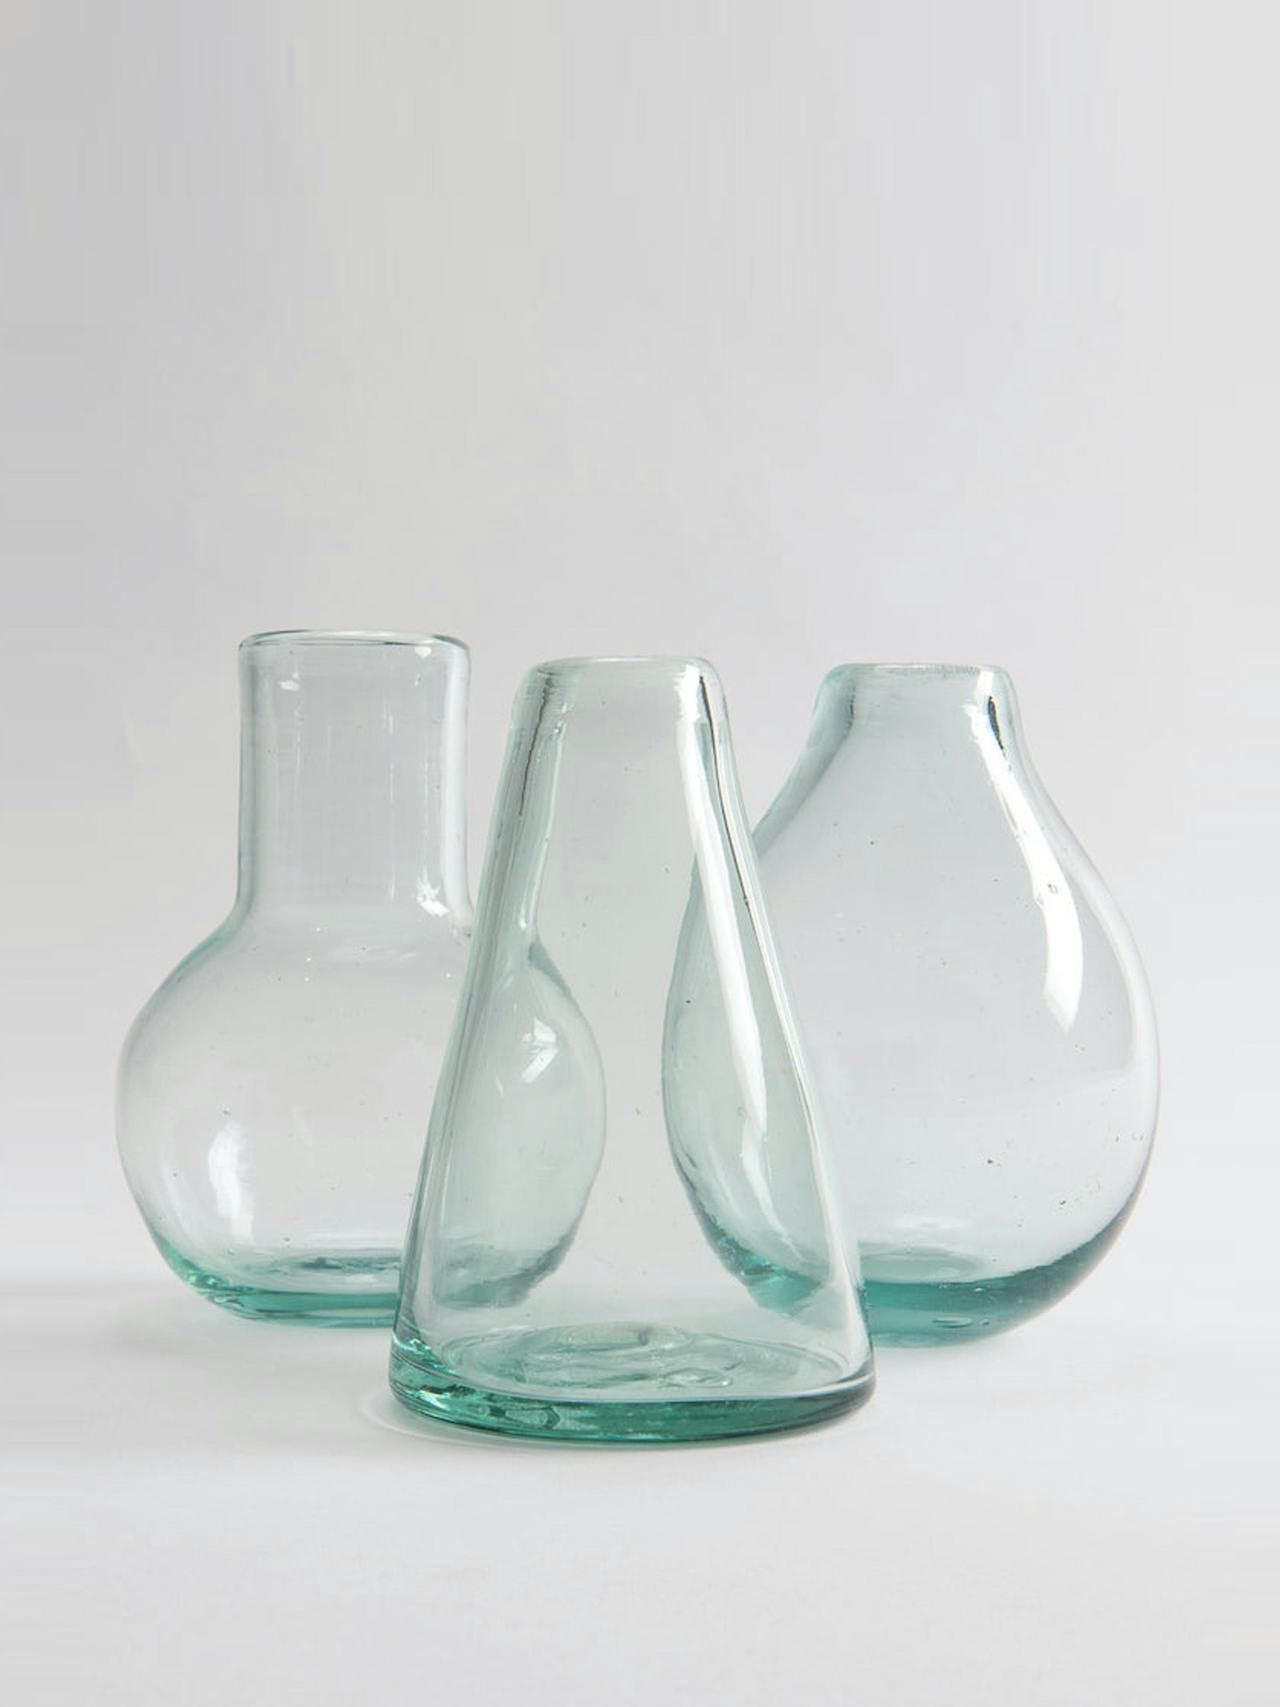 Zomi bud vases, set of 3